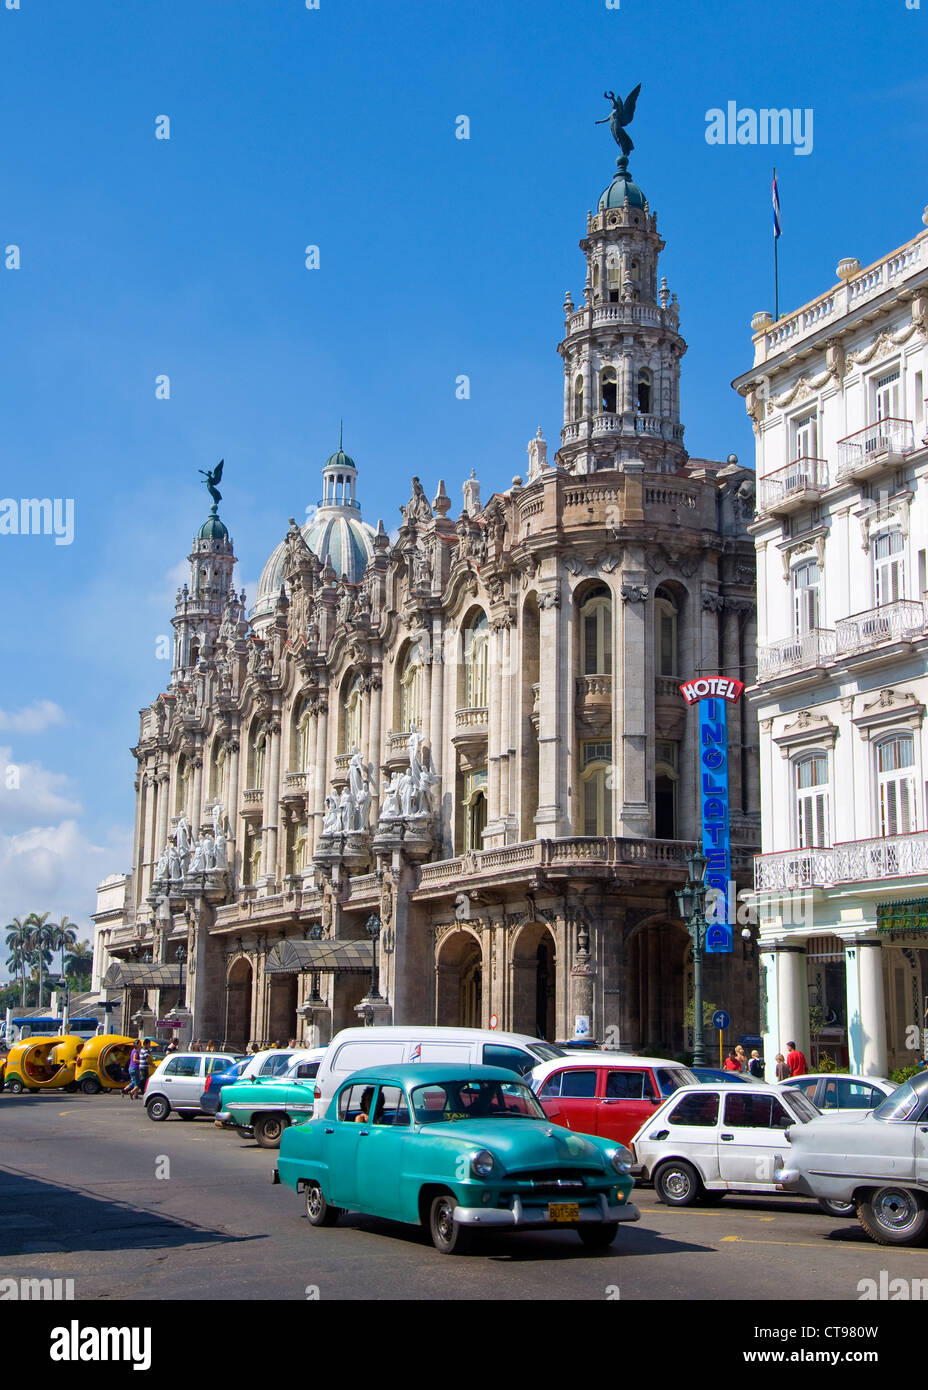 Old American Cars in front of the Gran Teatro, La Havana, Cuba Stock Photo